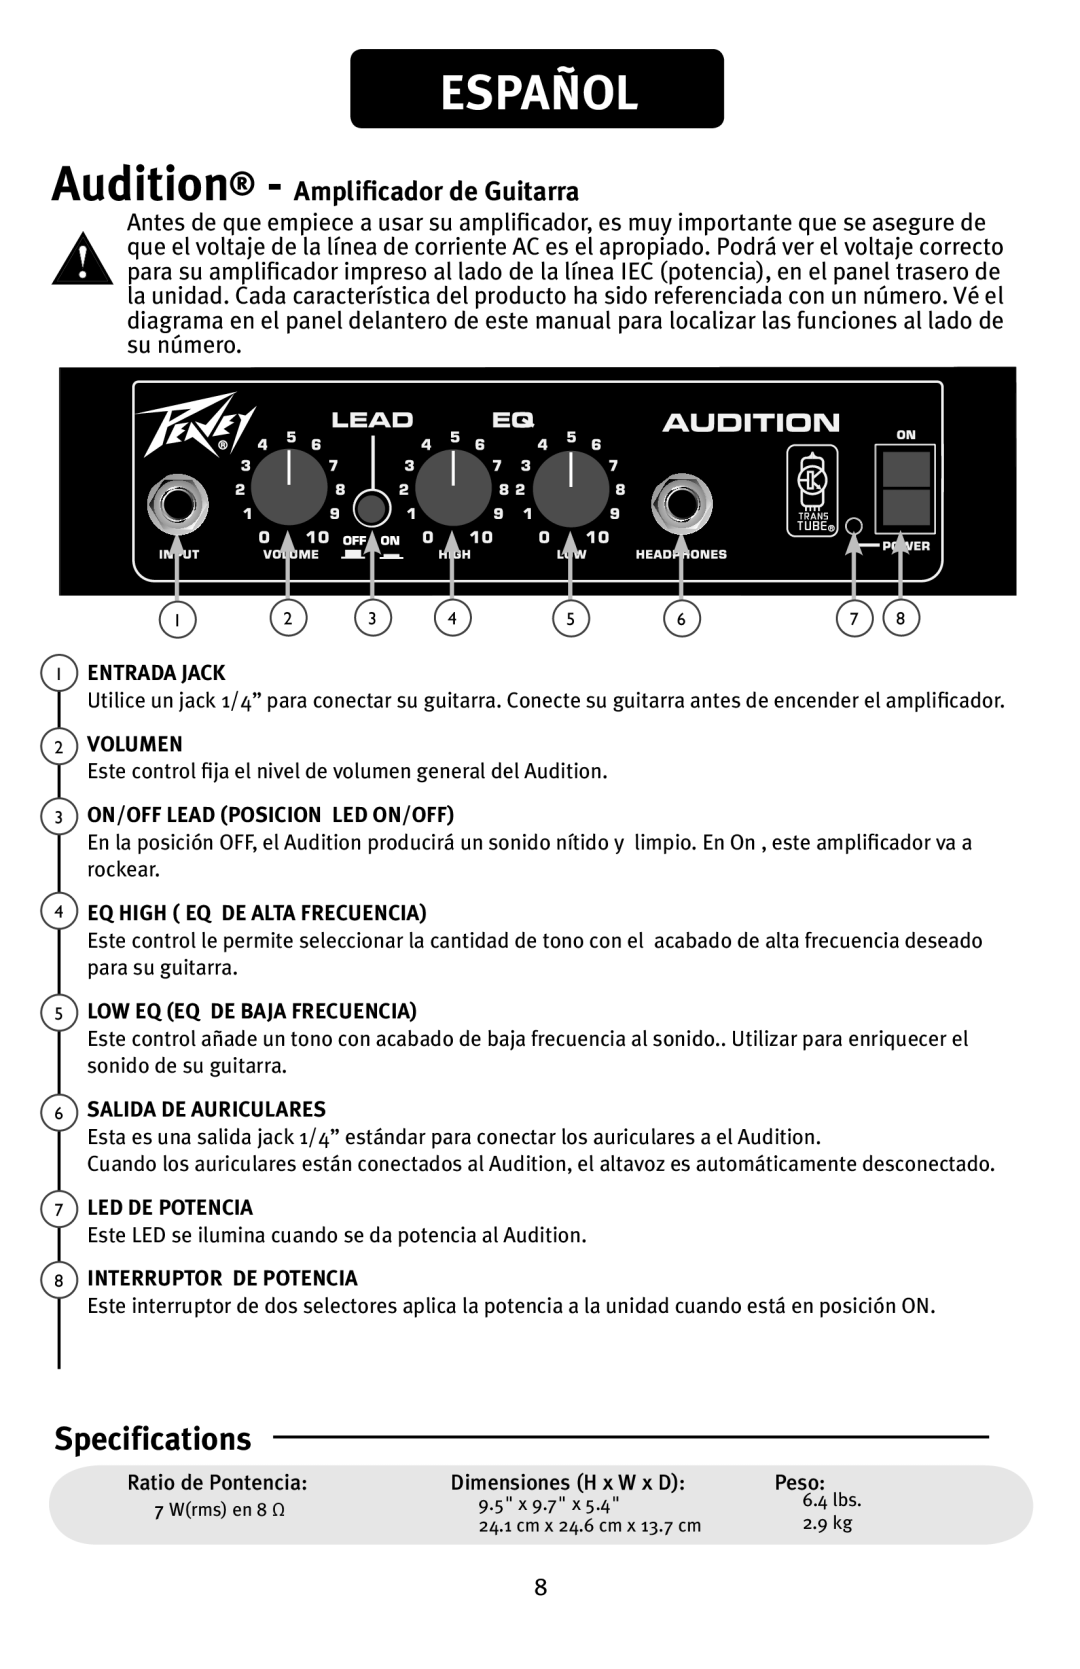 Peavey manual Español, Audition - Amplificador de Guitarra, Entrada Jack, Volumen, 3ON/OFF LEAD POSICION LED ON/OFF 